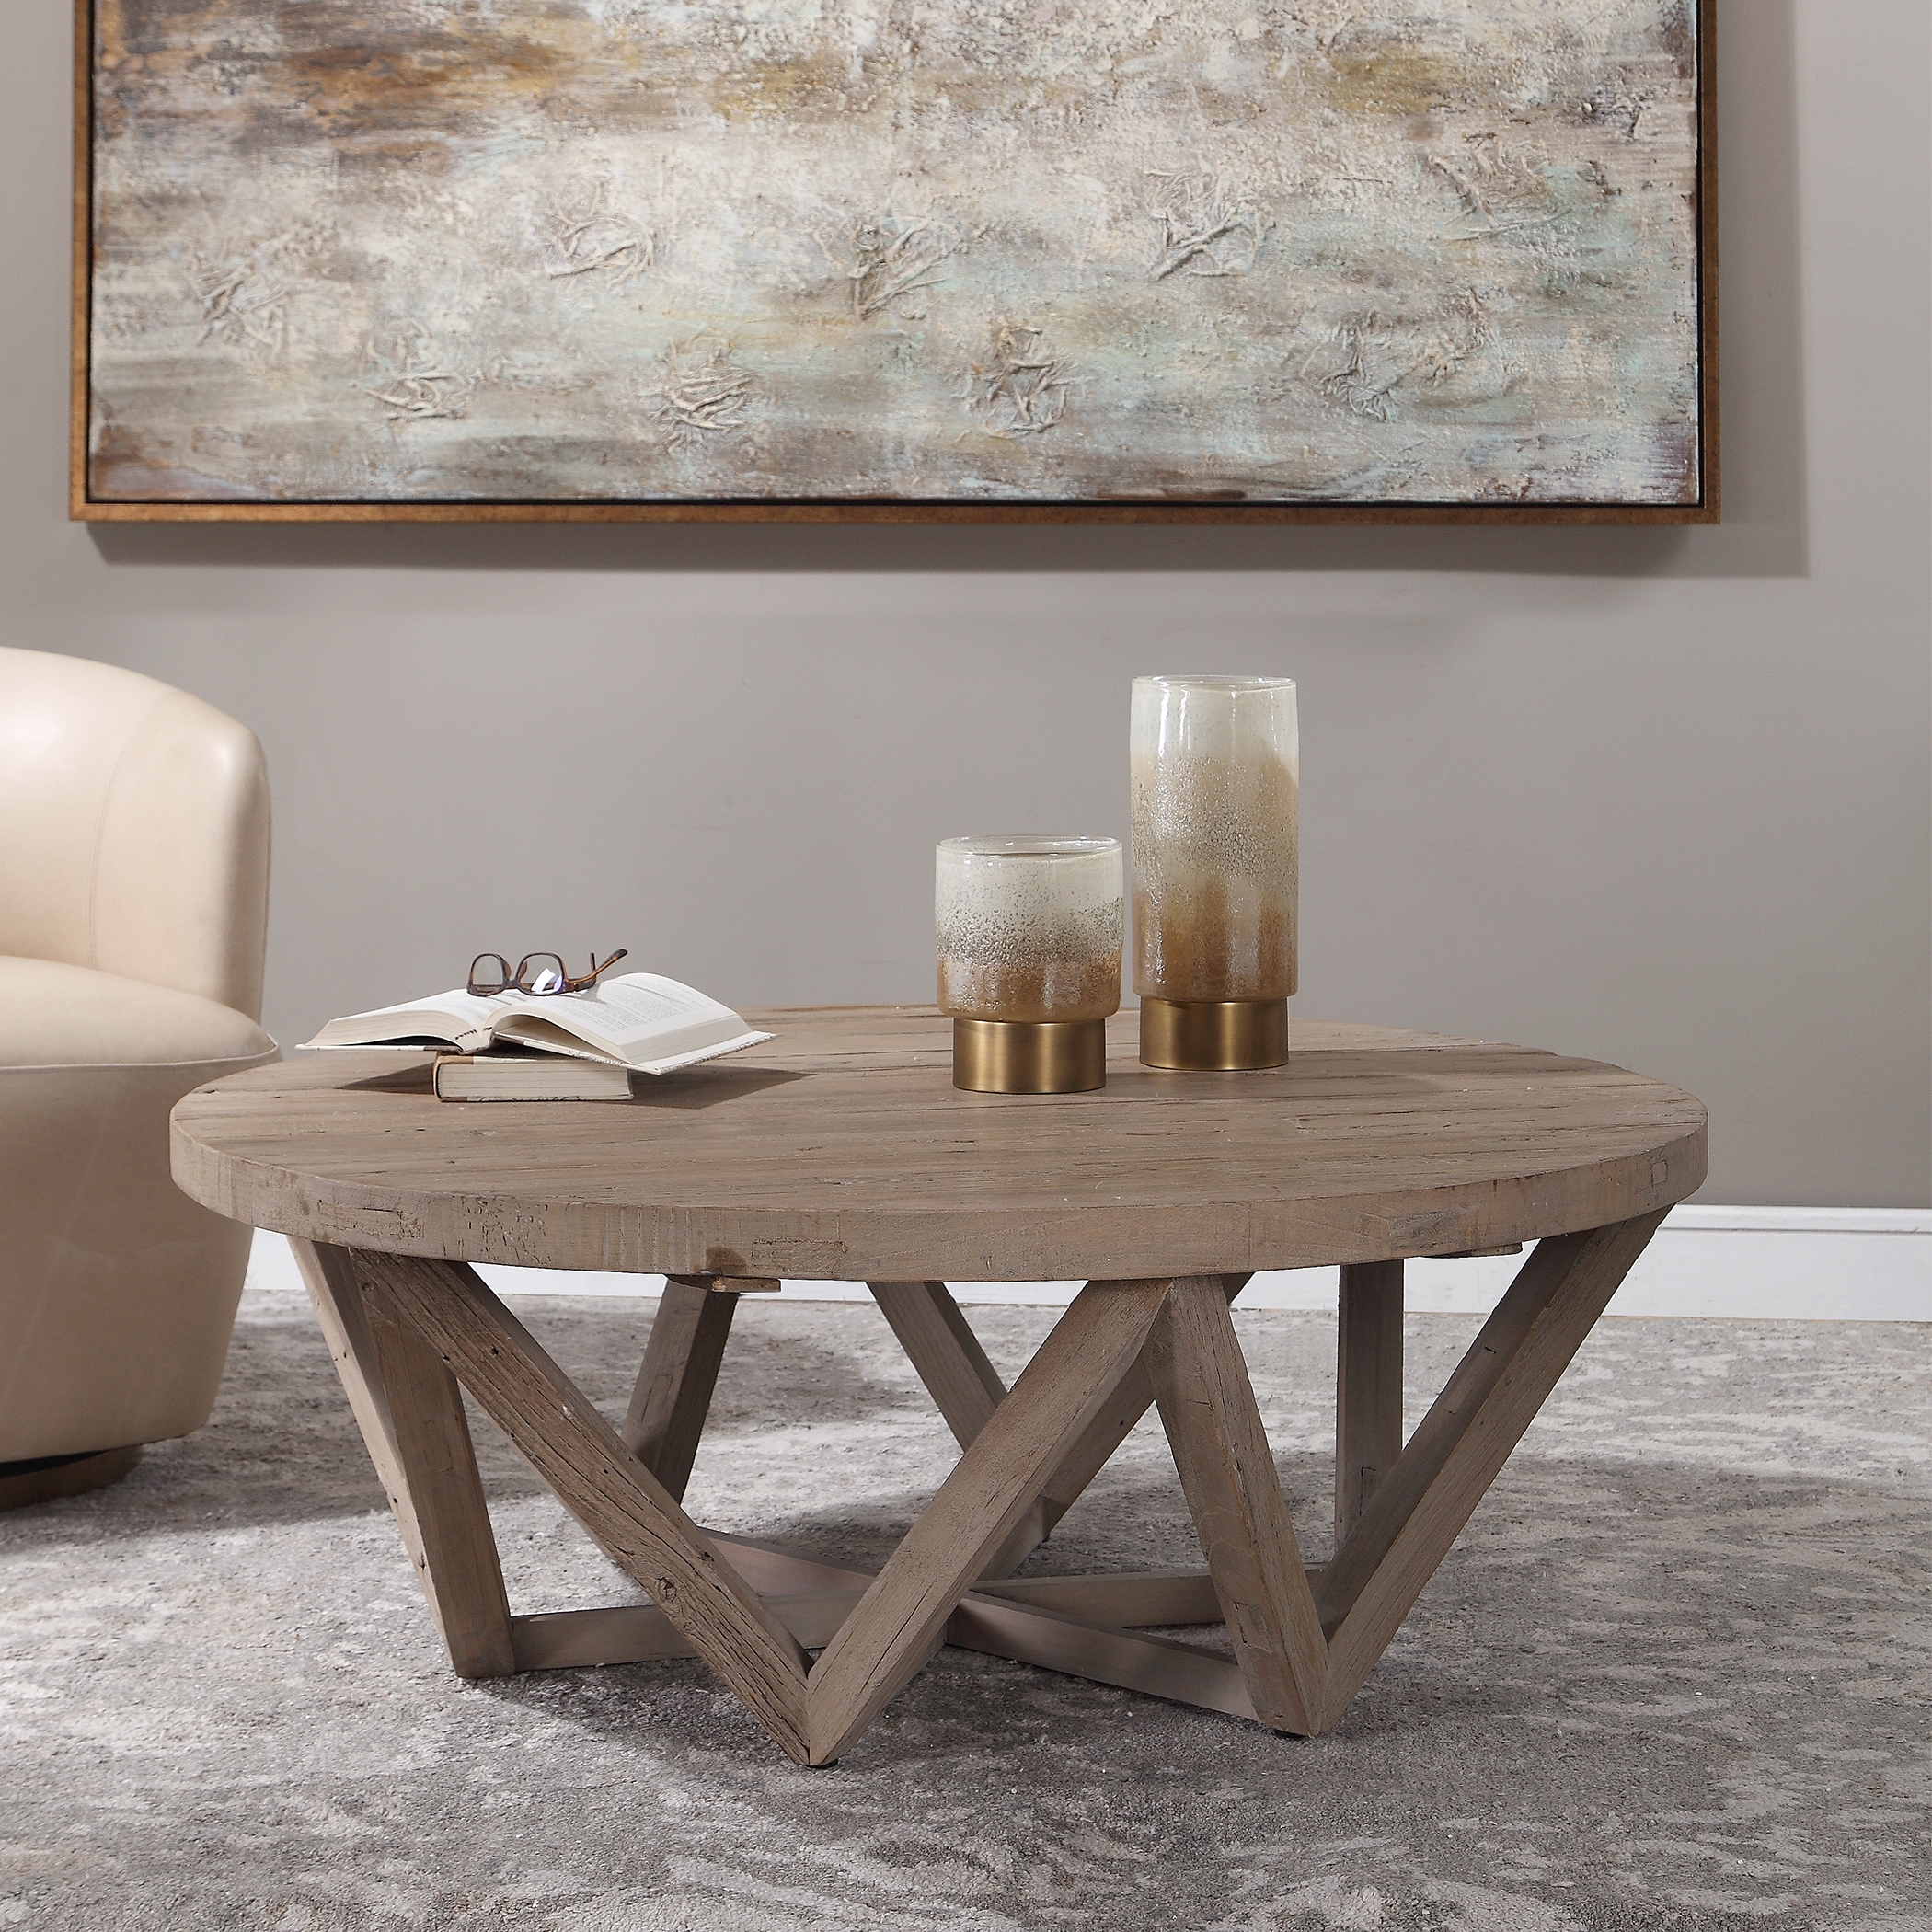 Kendry Reclaimed Wood Coffee Table 48" - Image 1